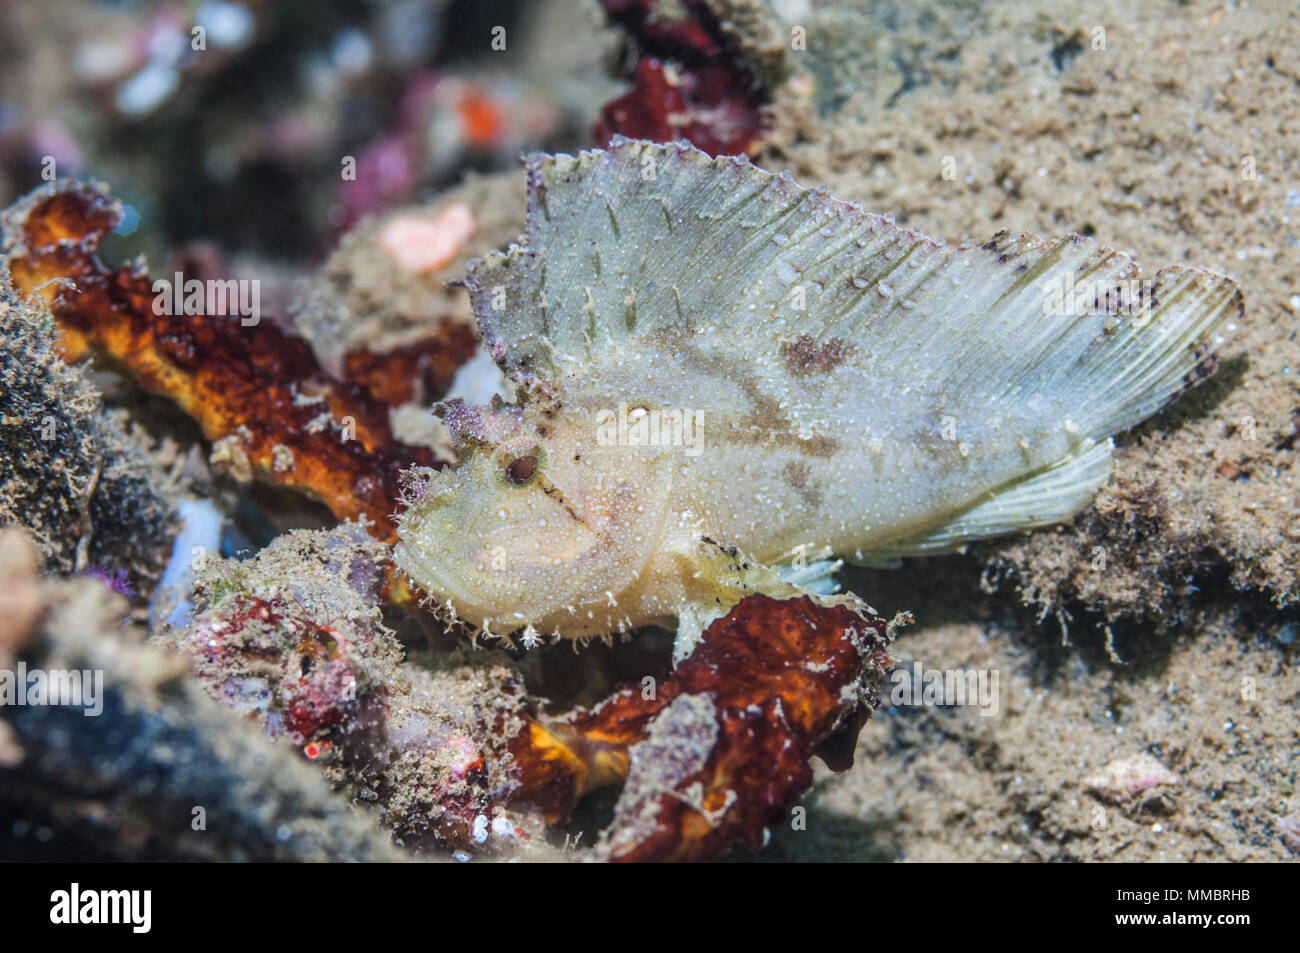 Leaf scorpionfis or Scorpion leaffish [Taenianotus triacanthus].  Ambon, Indonesia. Stock Photo